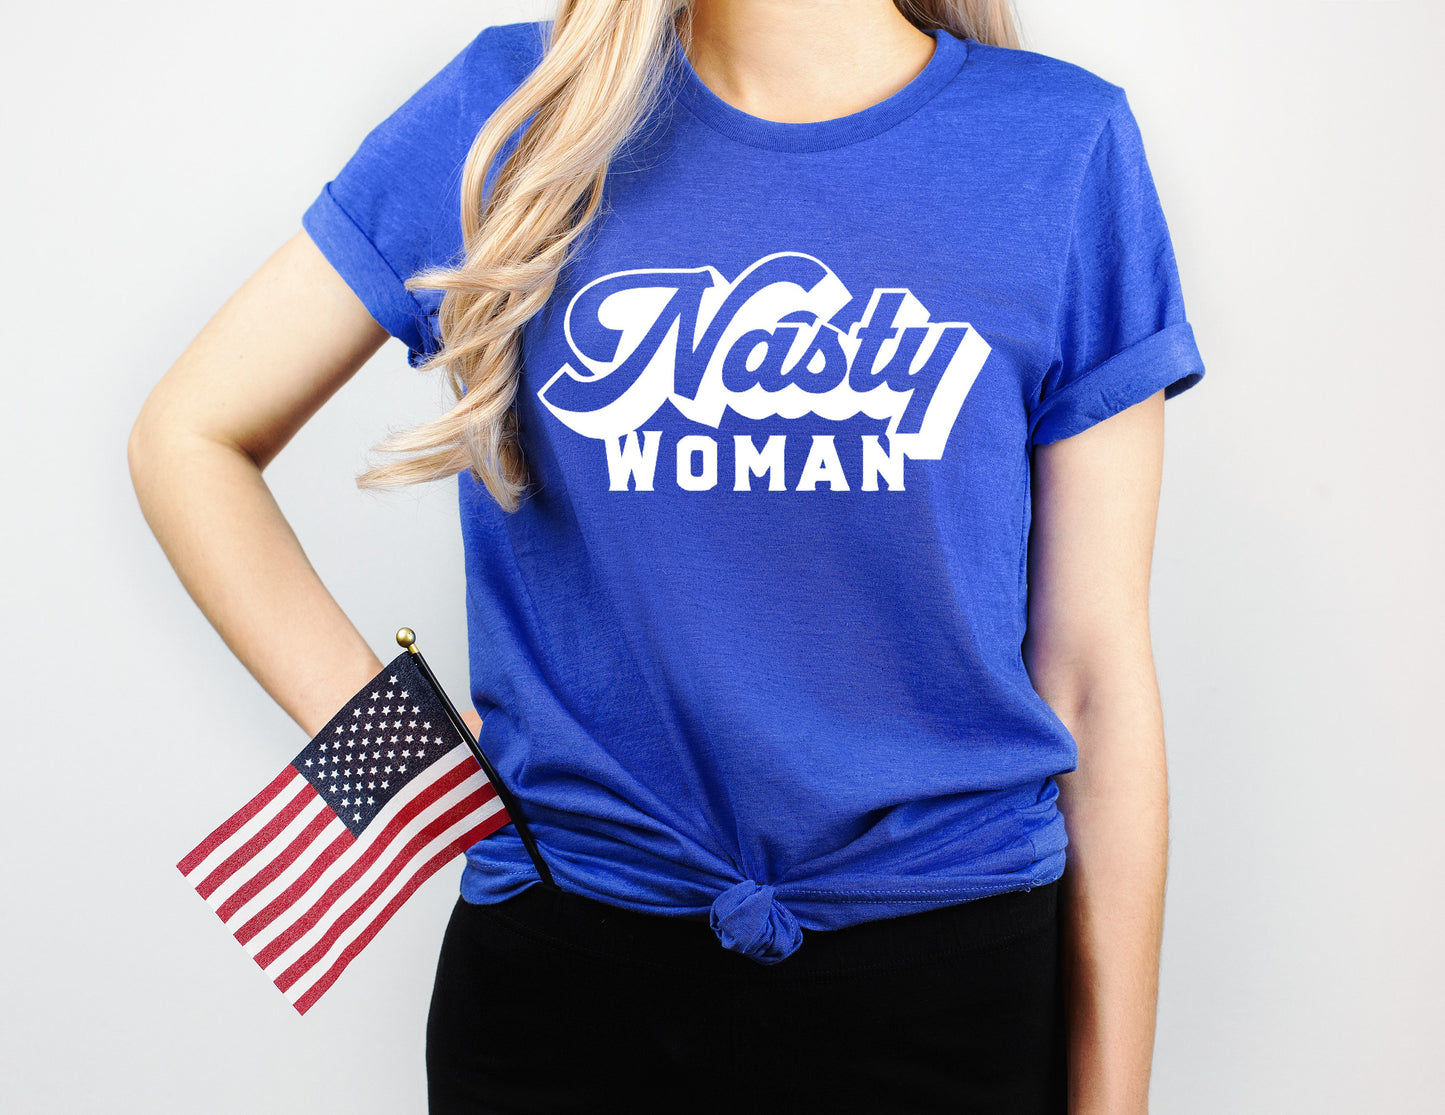 Nasty Woman t-shirt - Nasty Woman